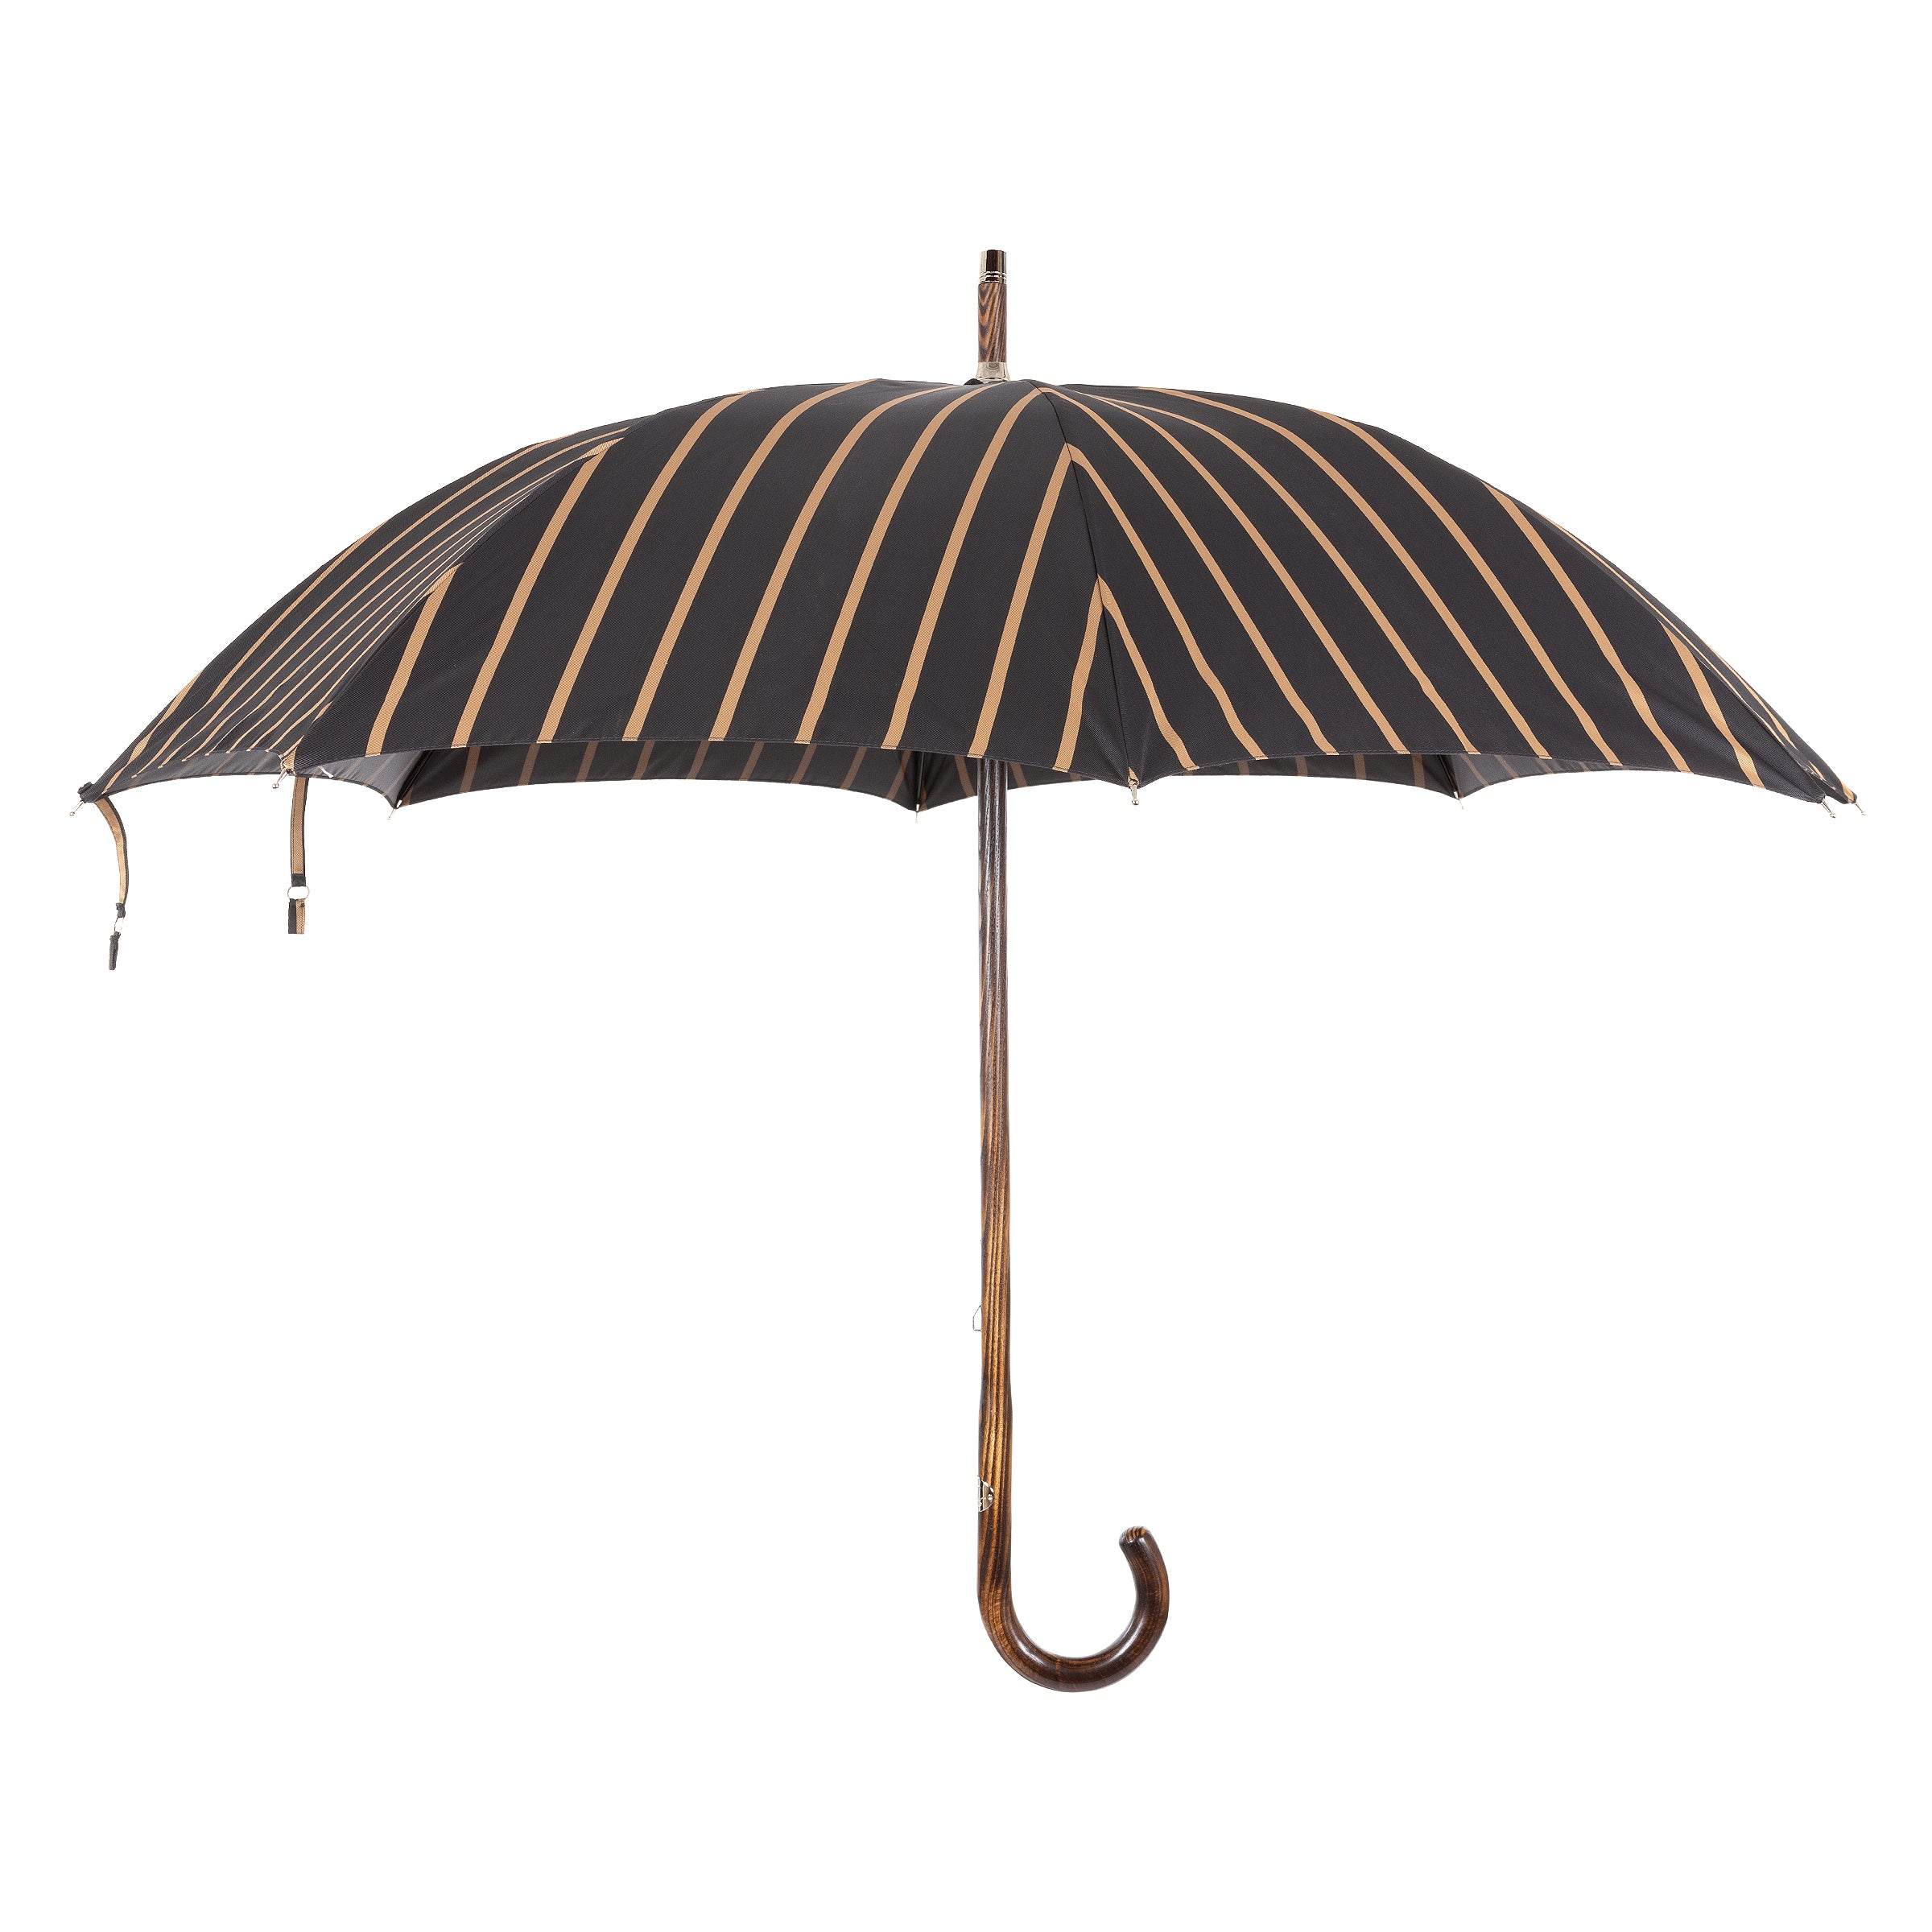 Francesco Maglia - Handcrafted Umbrellas Since 1854